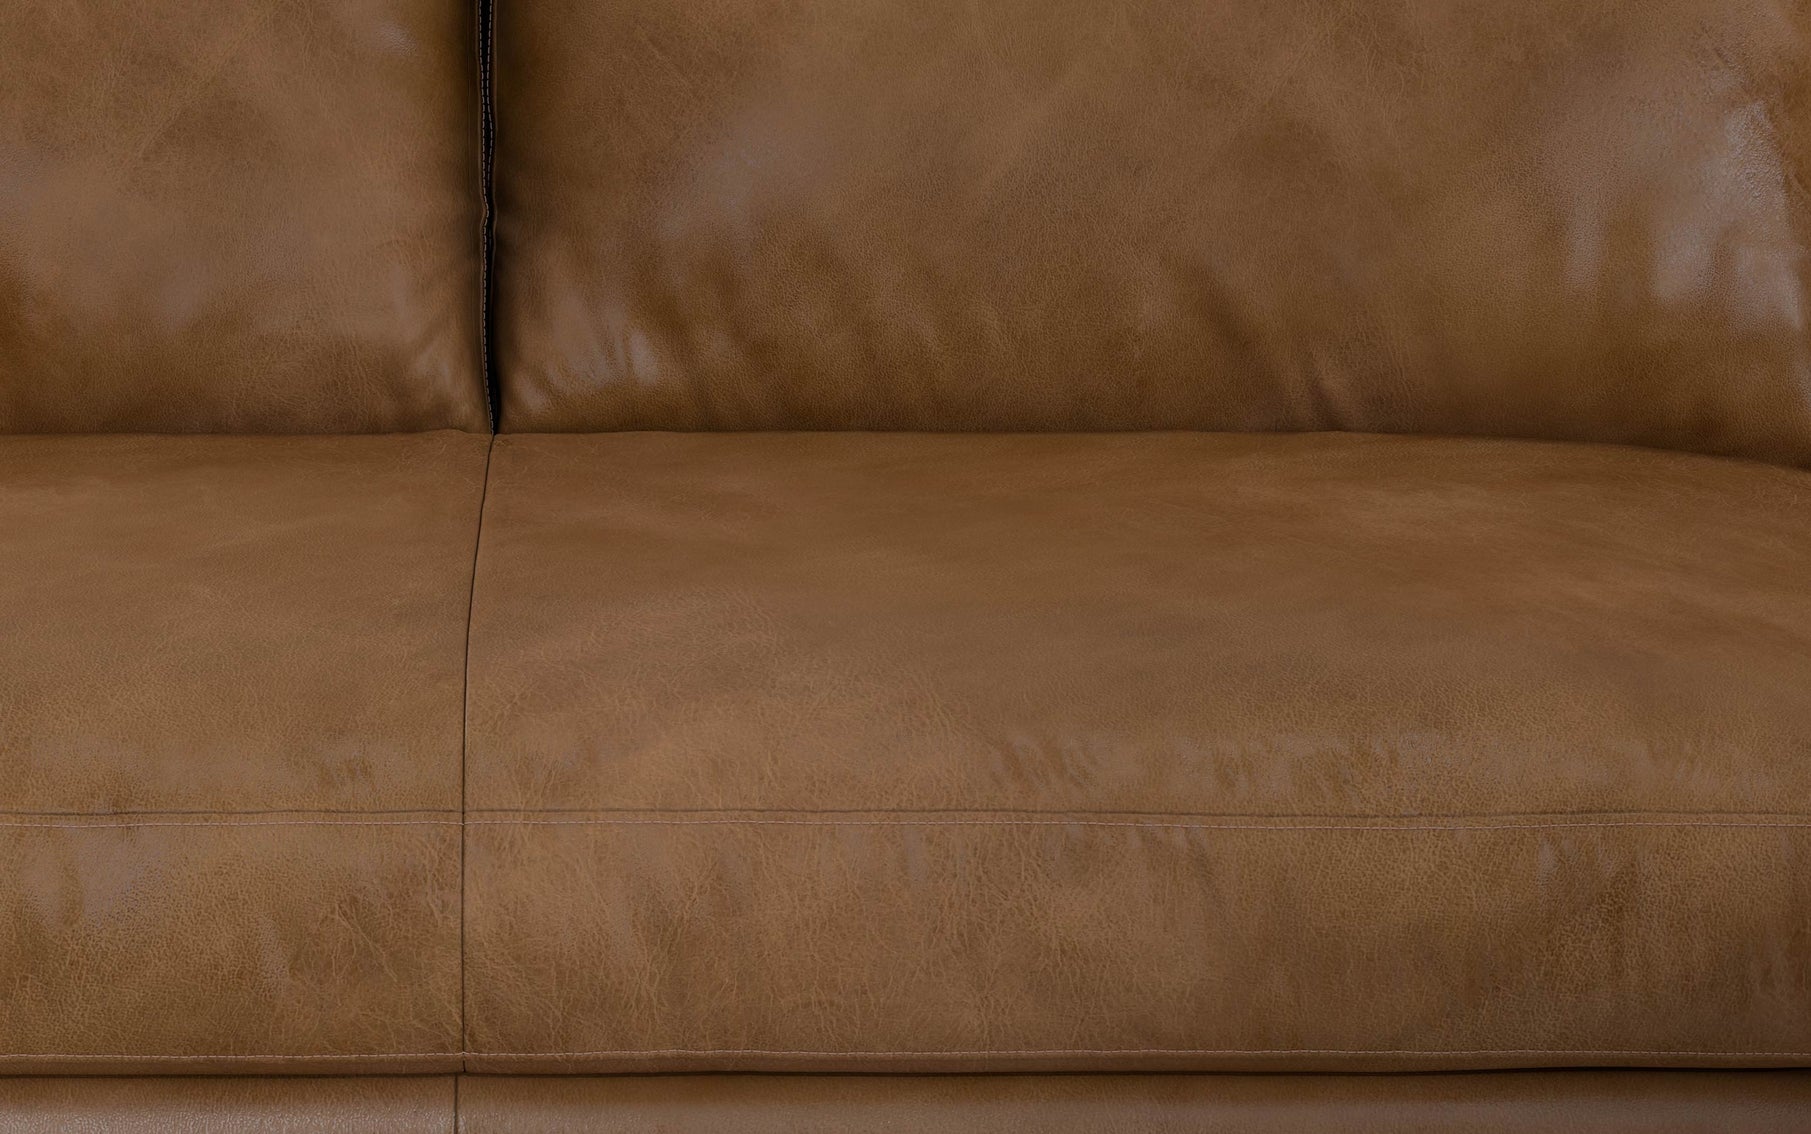 Caramel Brown Genuine Top Grain Leather | Morrison 72 inch Mid Century Sofa in Genuine Leather